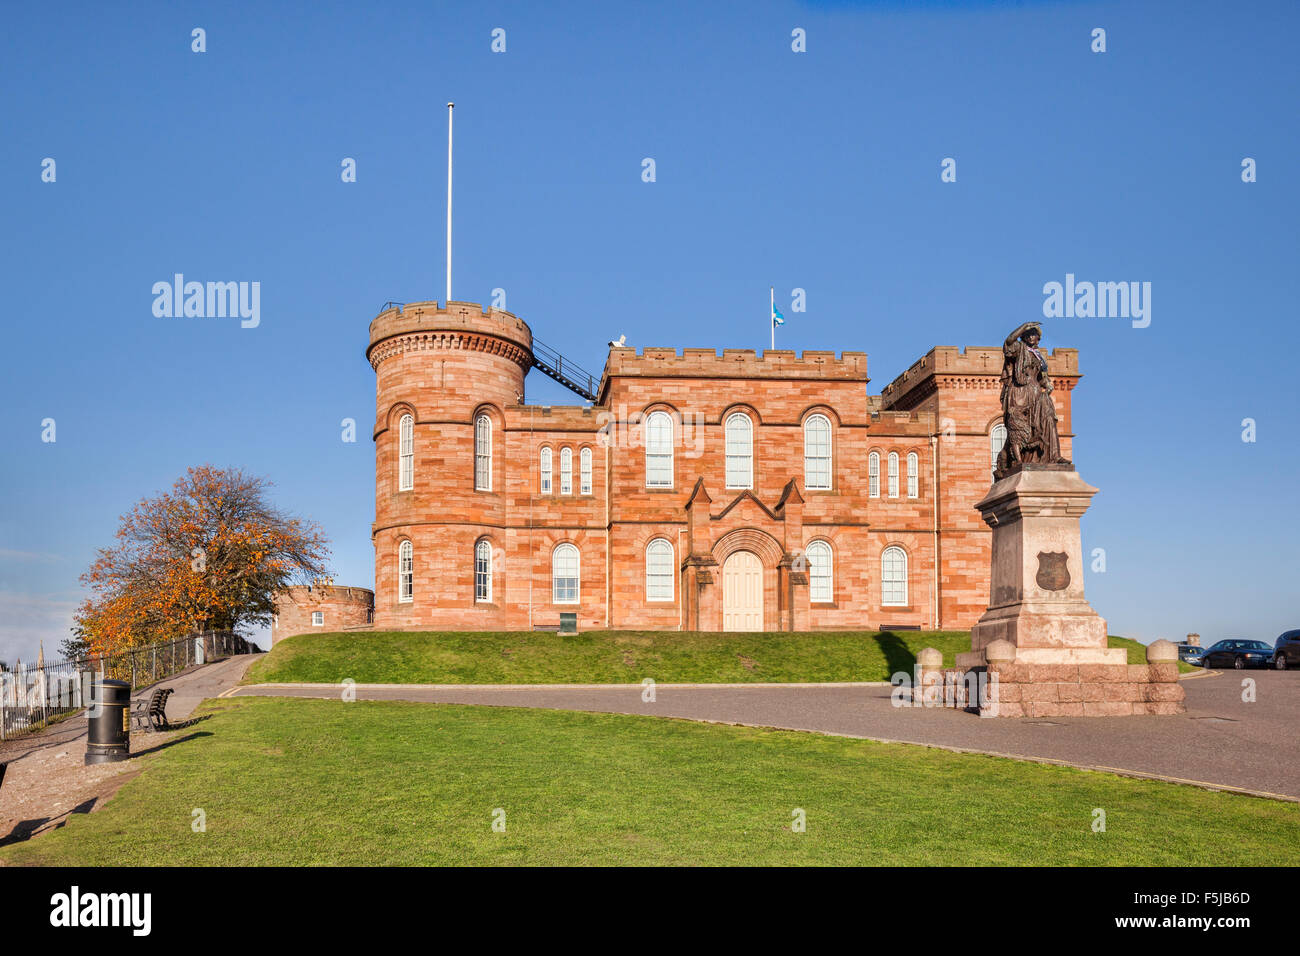 Inverness Castle and statue of Flora MacDonald, Inverness, Highland, Scotland, UK. Stock Photo